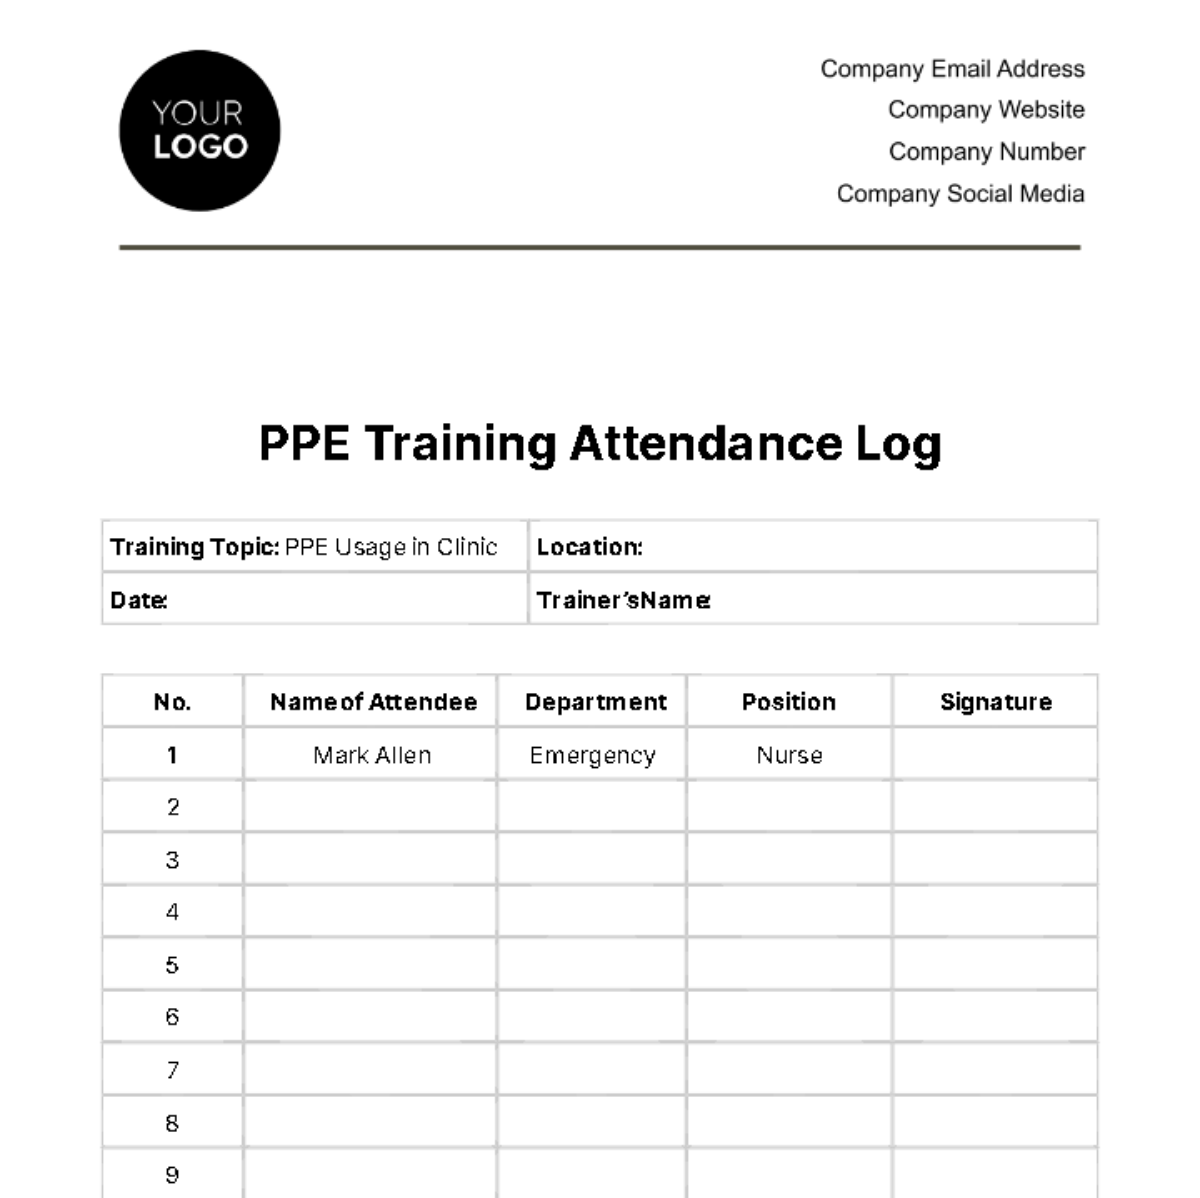 PPE Training Attendance Log Template